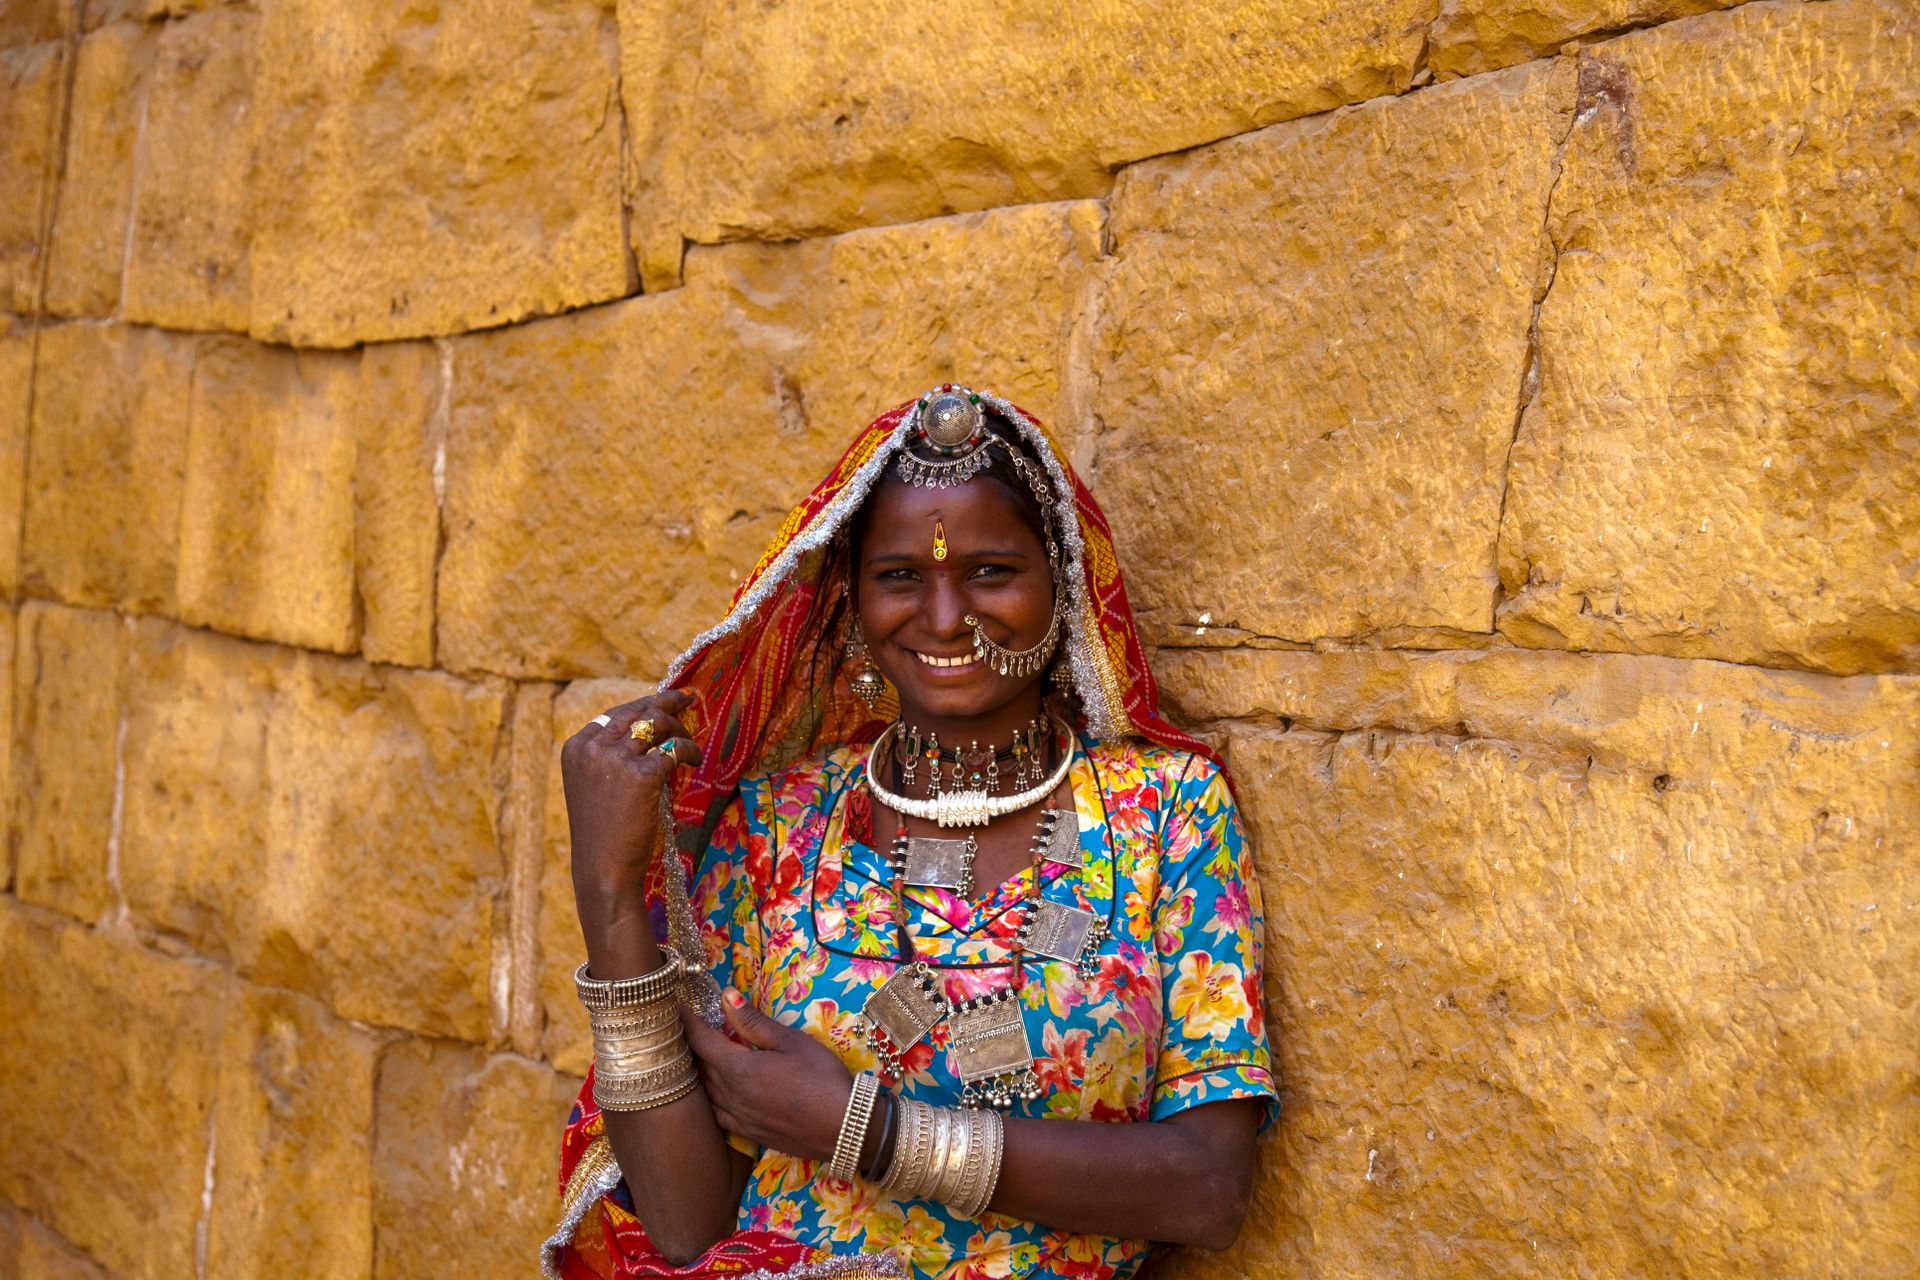 Femme indienne en tenue traditionnelle du Rajasthan - Inde©thinkstock